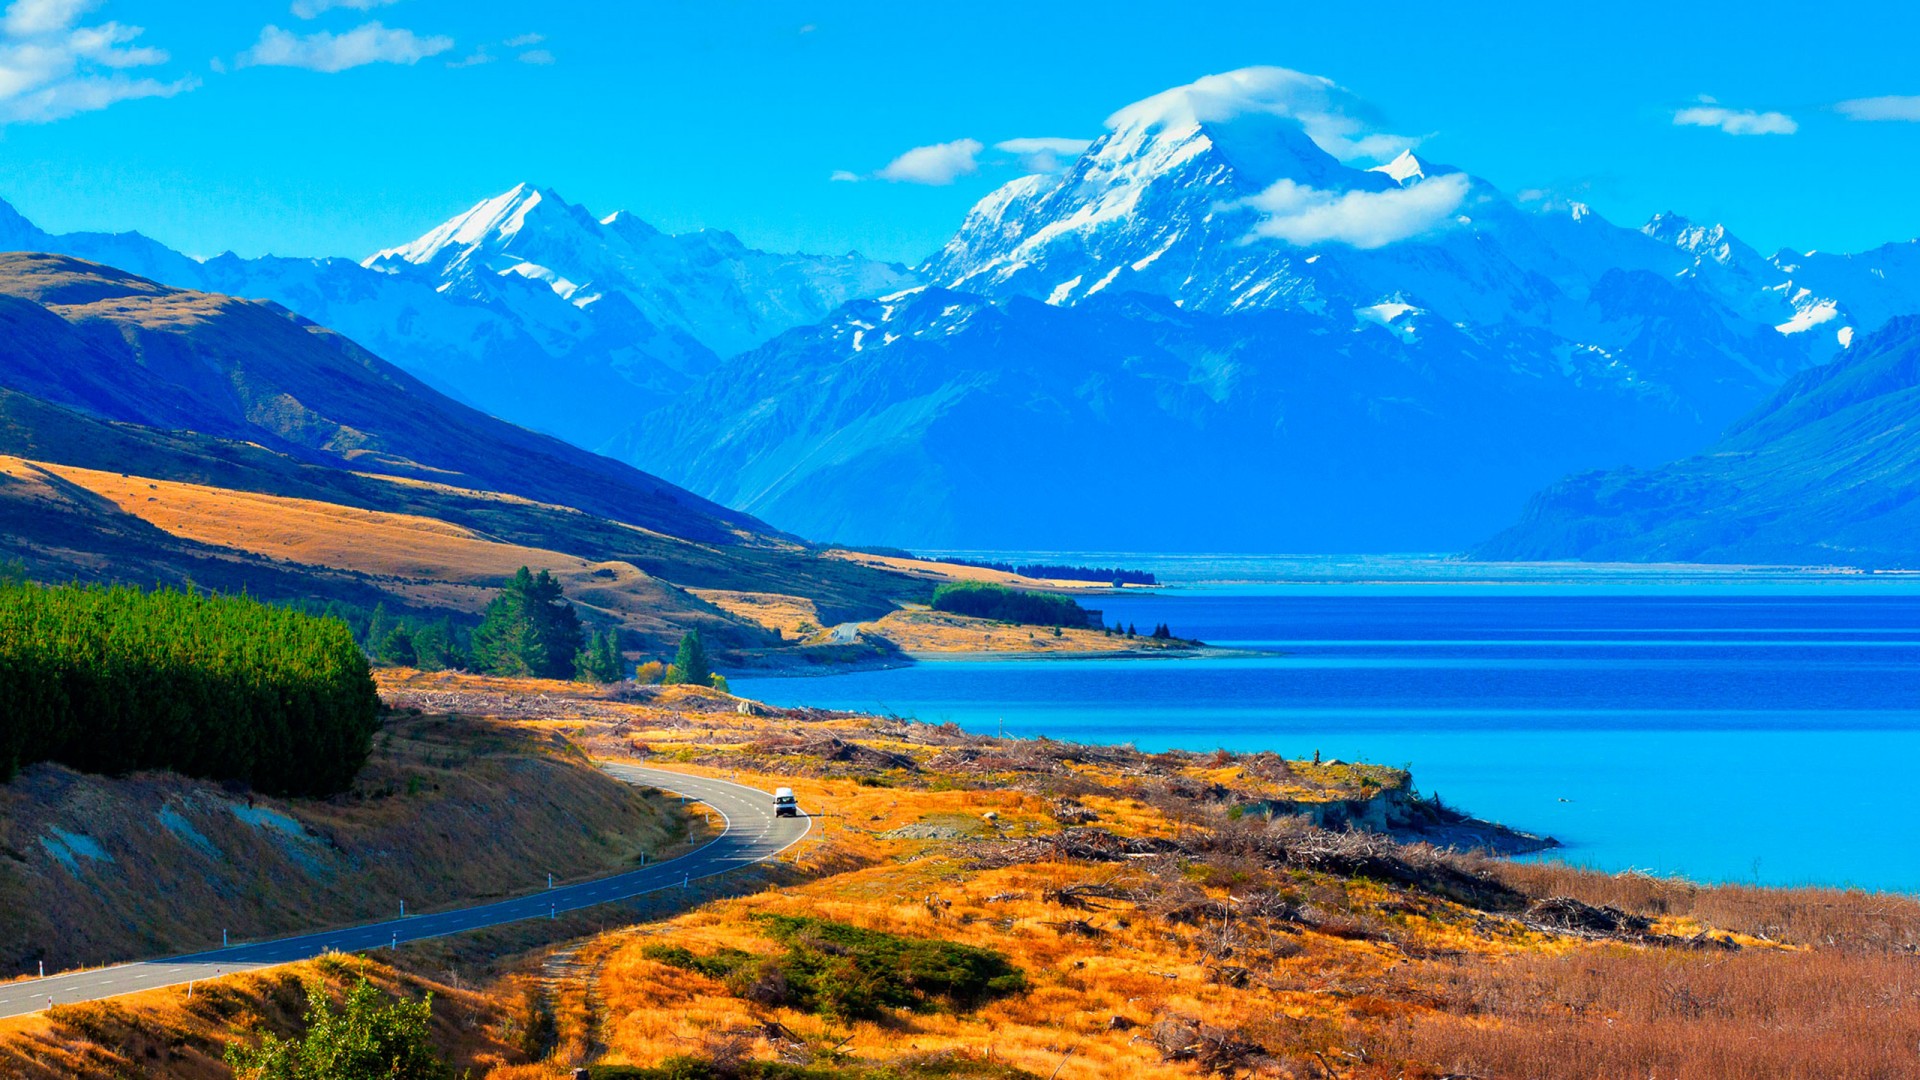 Lake Pukaki New Zealand Desktop Wallpaper Hd